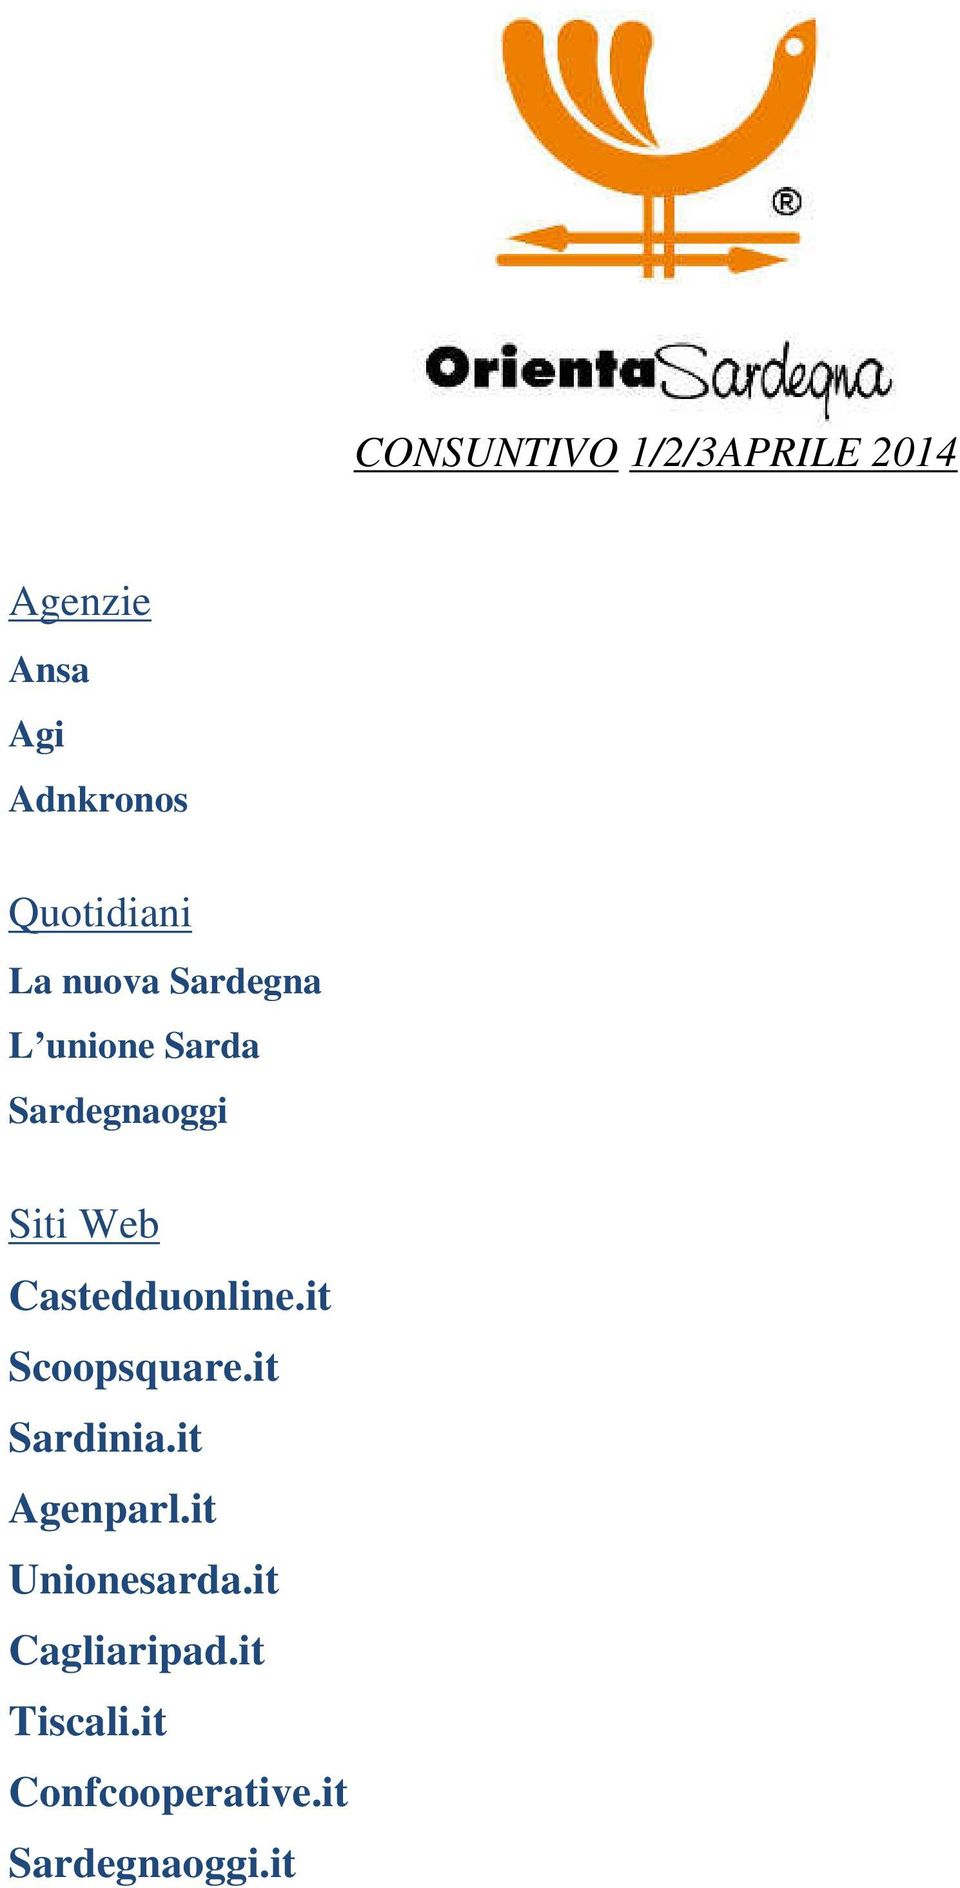 Web Castedduonline.it Scoopsquare.it Sardinia.it Agenparl.